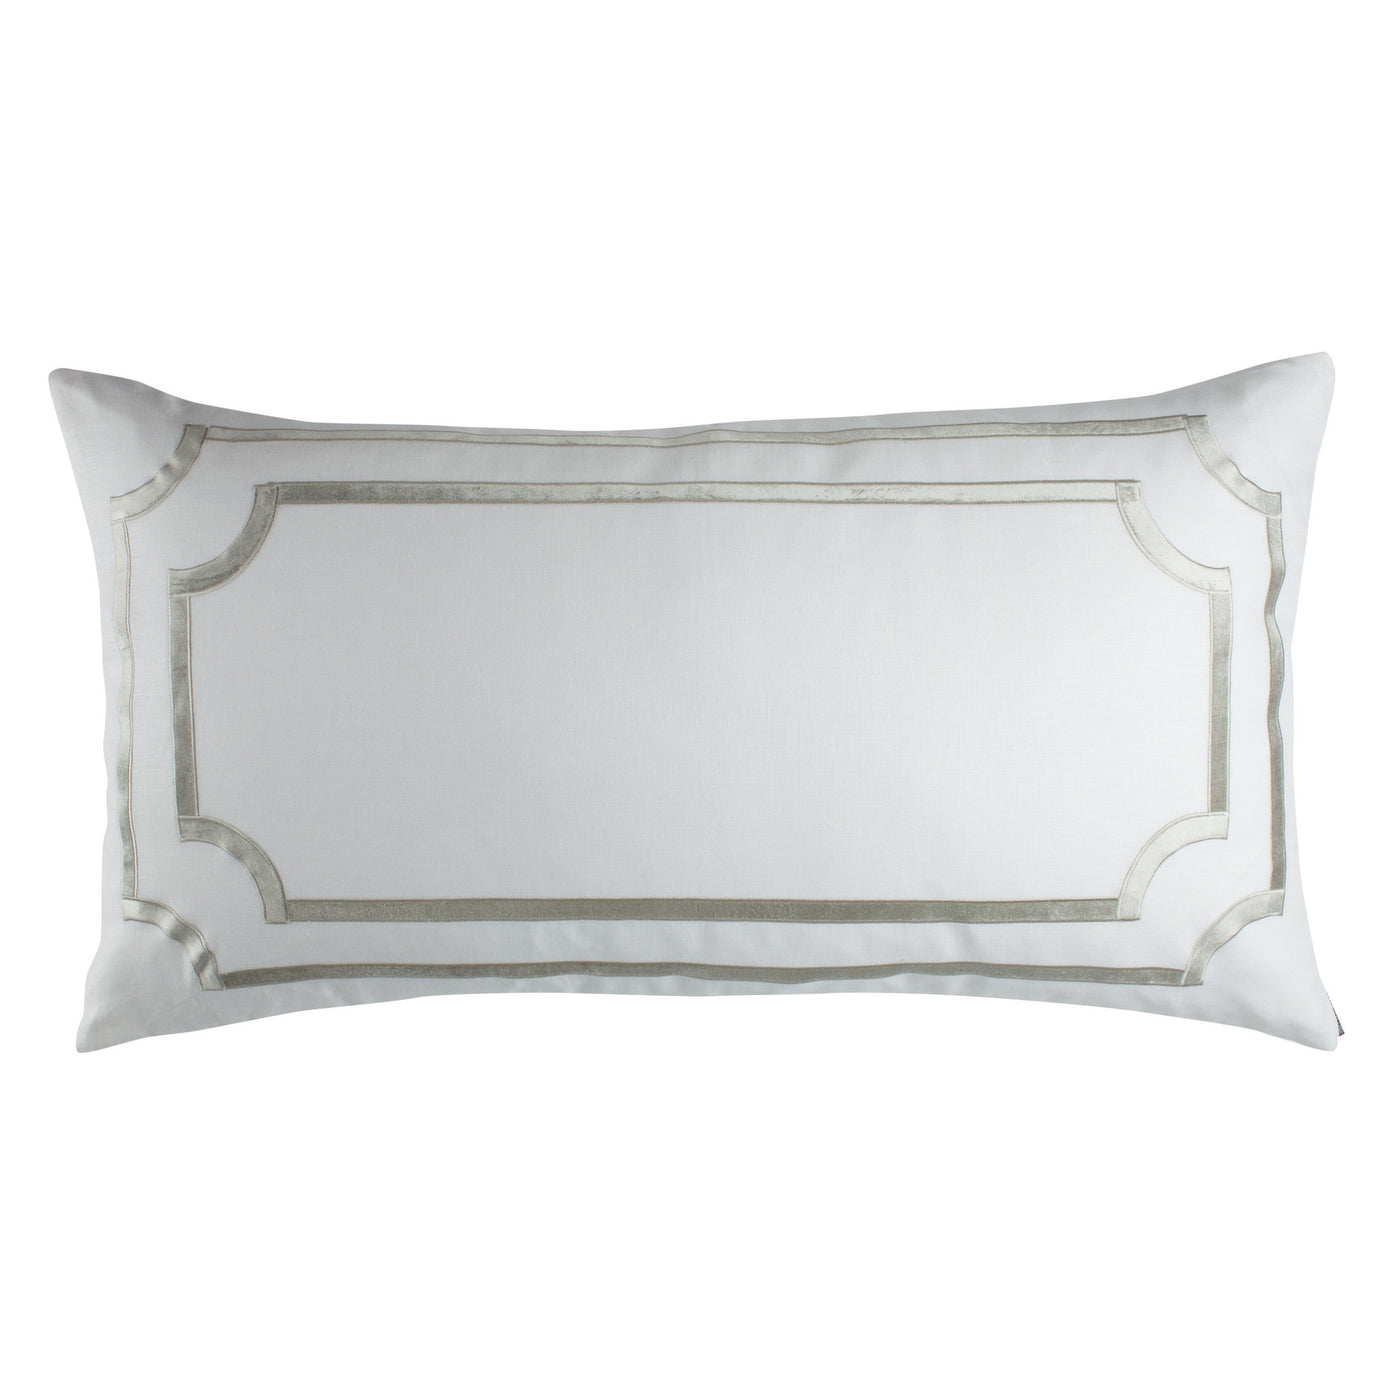 SoHo King Pillow with Ice Silver Velvet Trim - Villa Decor Design & Style - 1